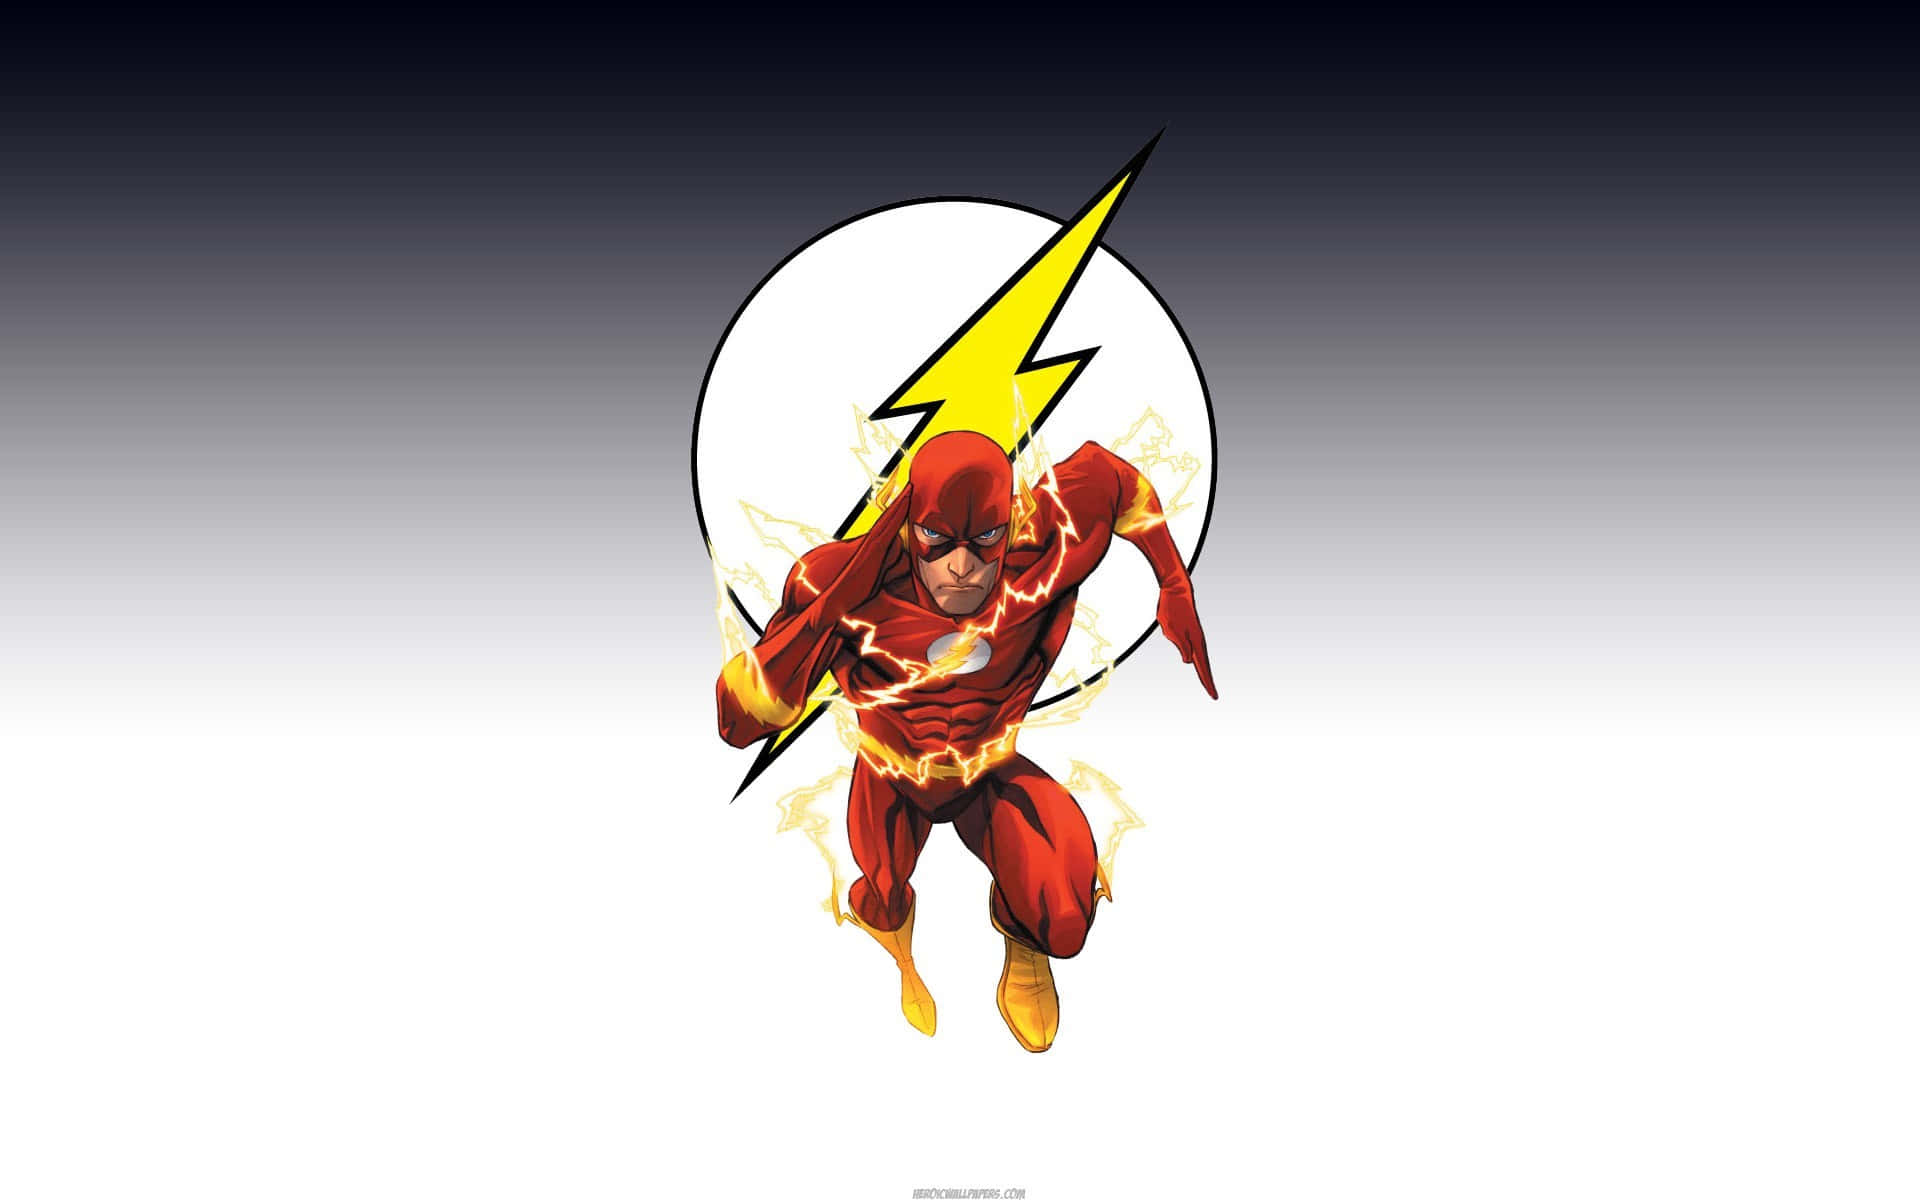 Dasflash-hintergrundbild - Das Flash-hintergrundbild